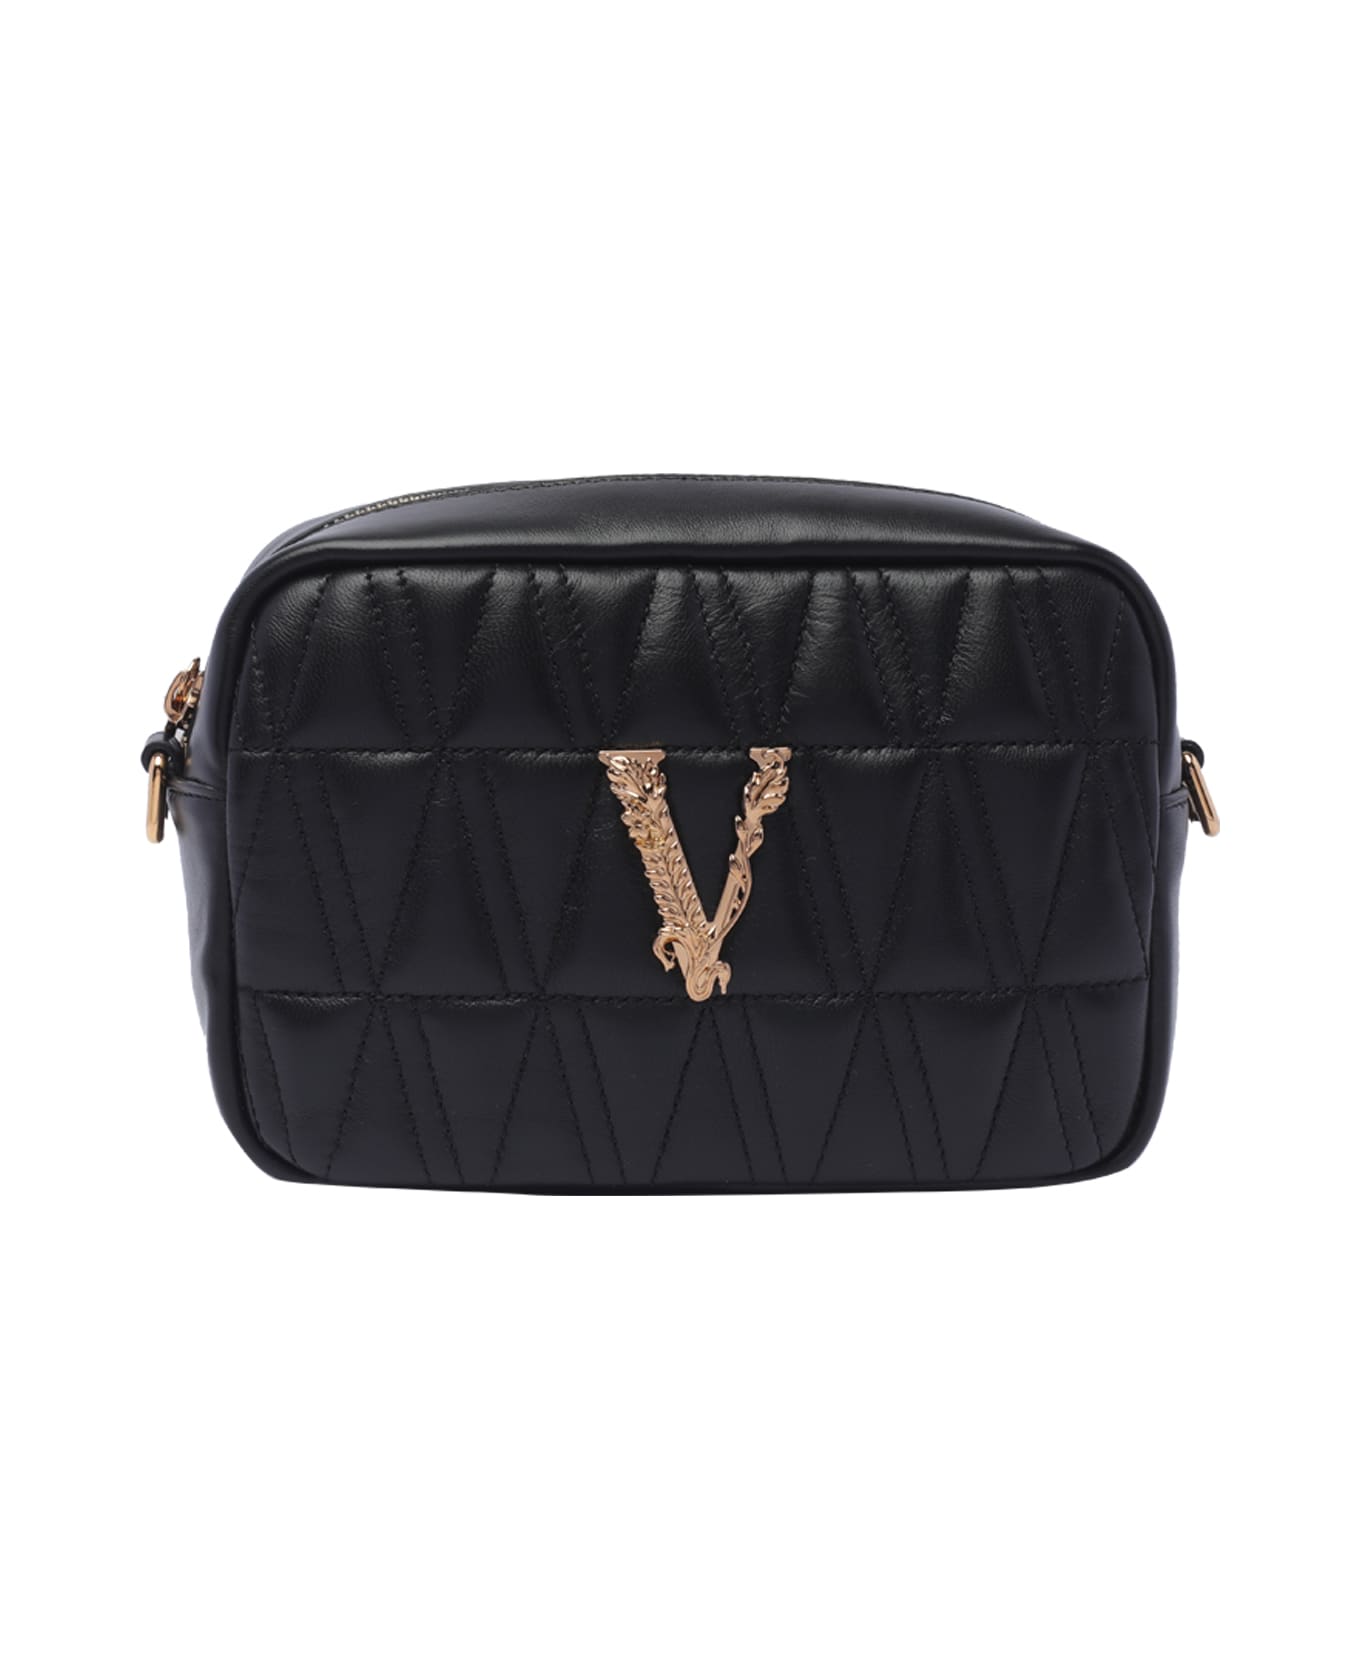 Versace Virtus Crossbody Bag - Black